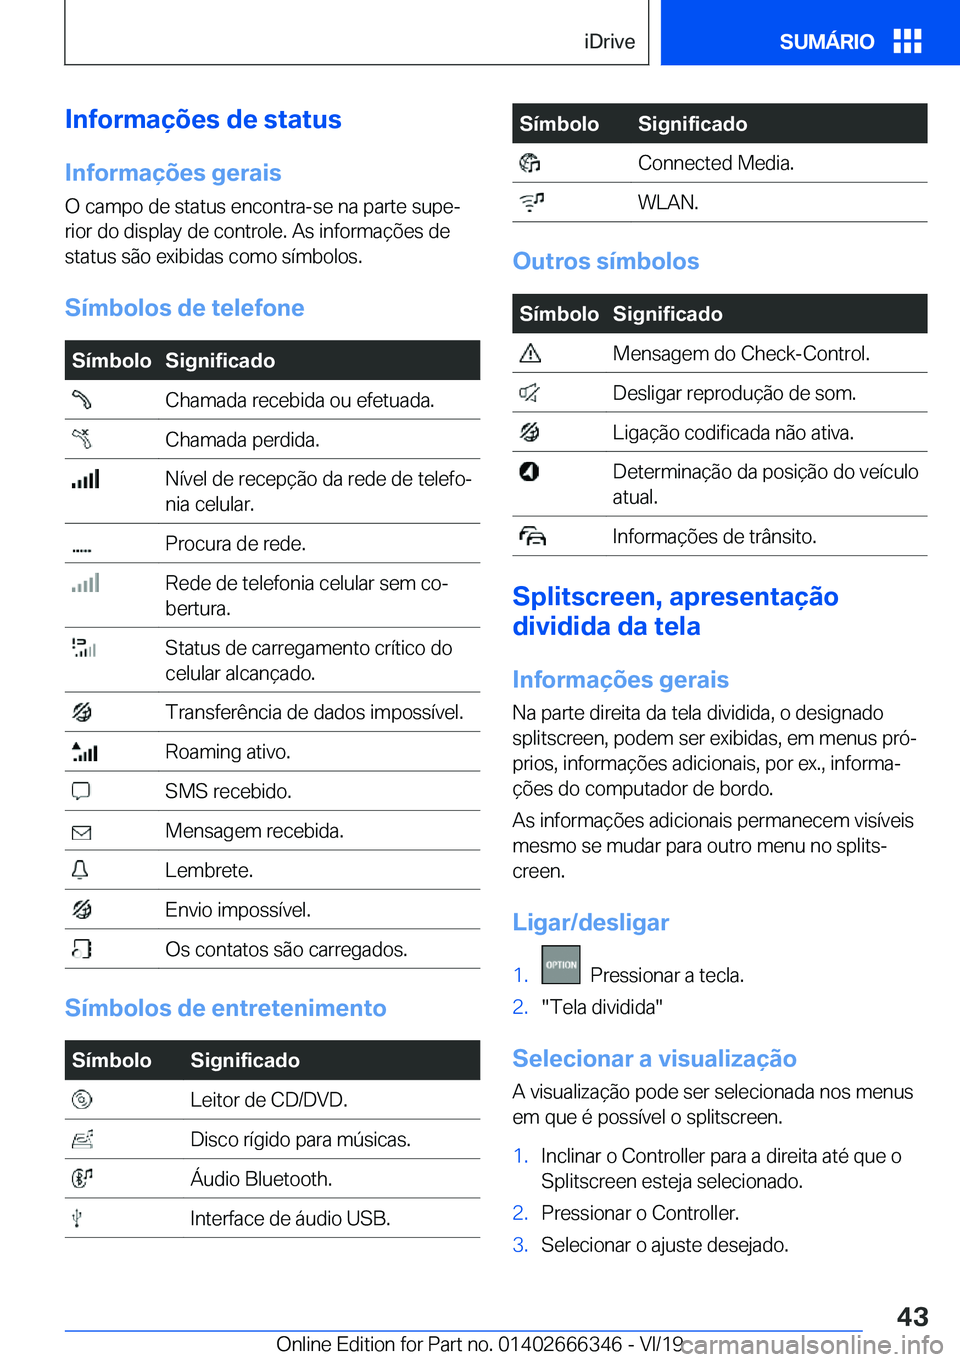 BMW 4 SERIES COUPE 2020  Manual do condutor (in Portuguese) �I�n�f�o�r�m�a�